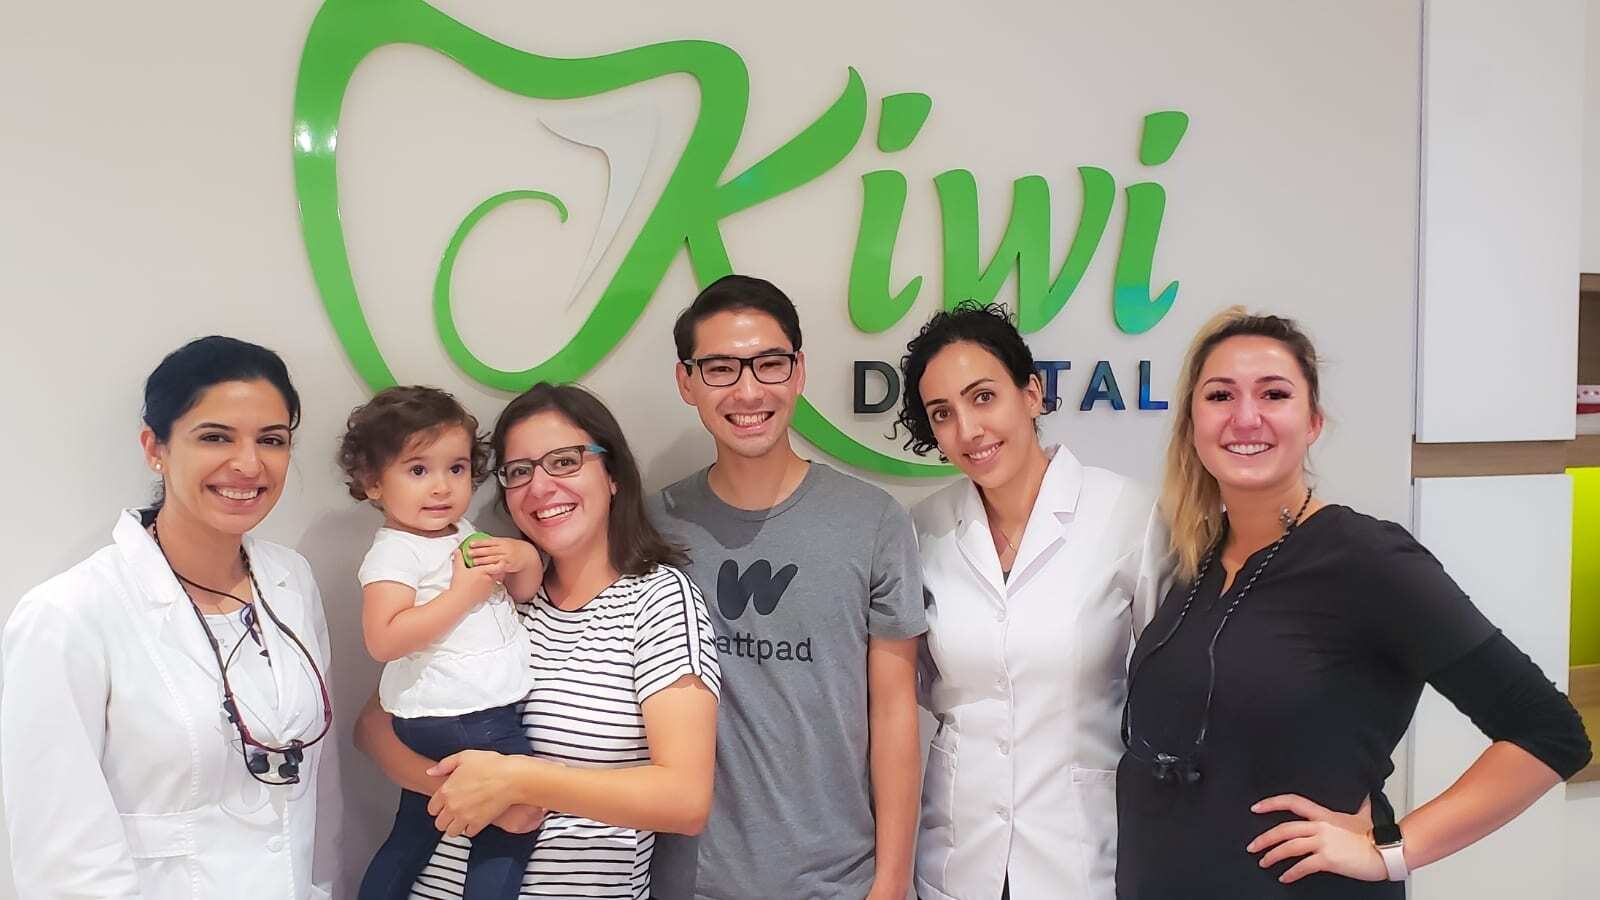 Kiwi_Dental_Staff_Posing_With_Patients